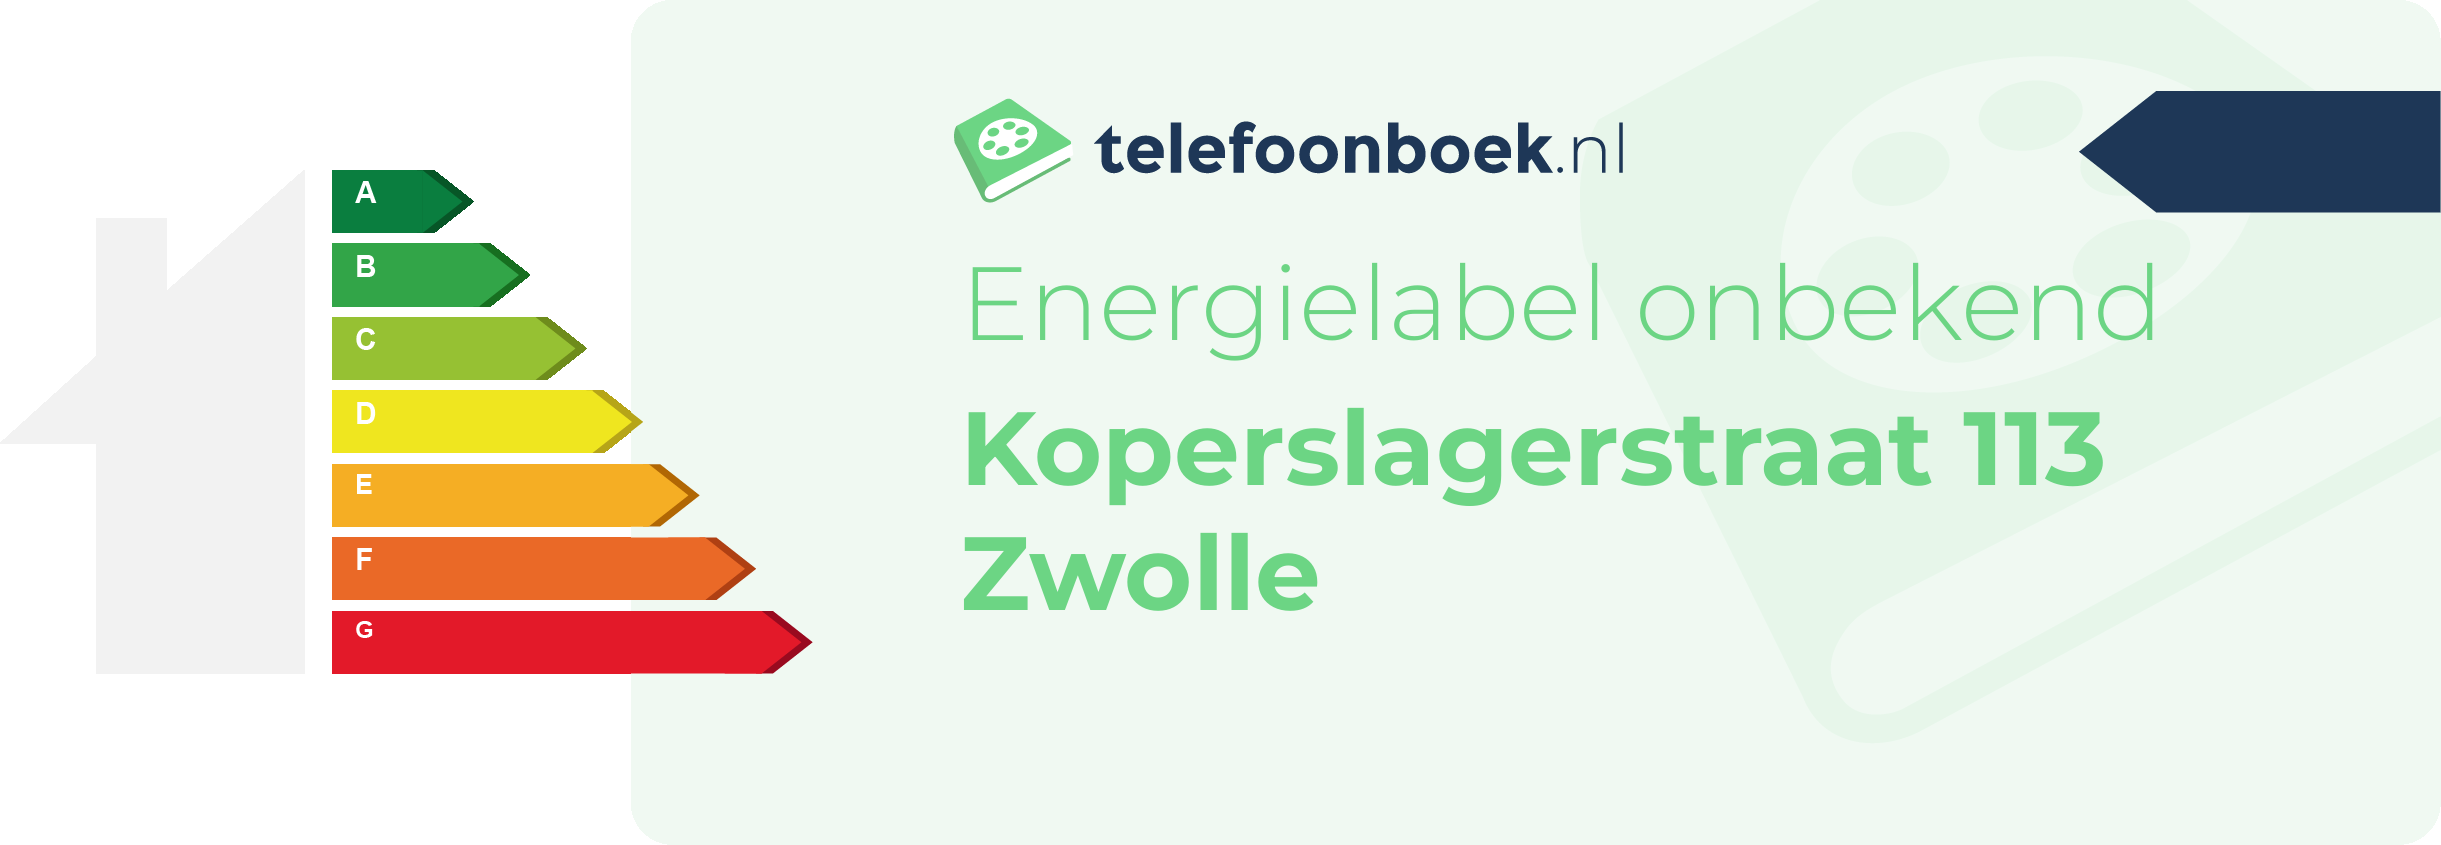 Energielabel Koperslagerstraat 113 Zwolle